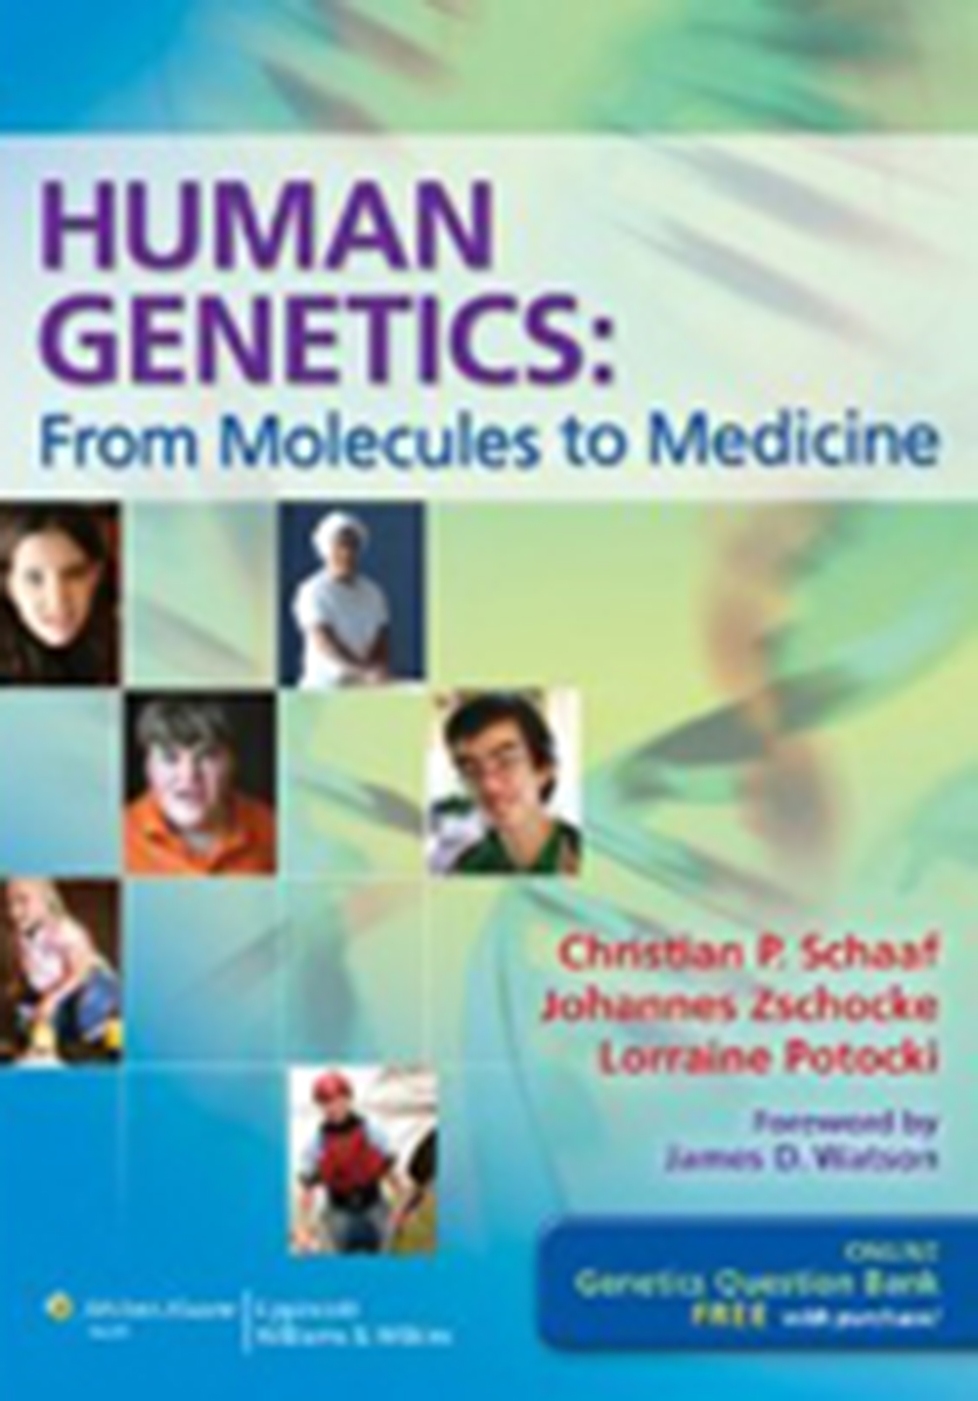 Human Genetics: From Molecular to Medicine.